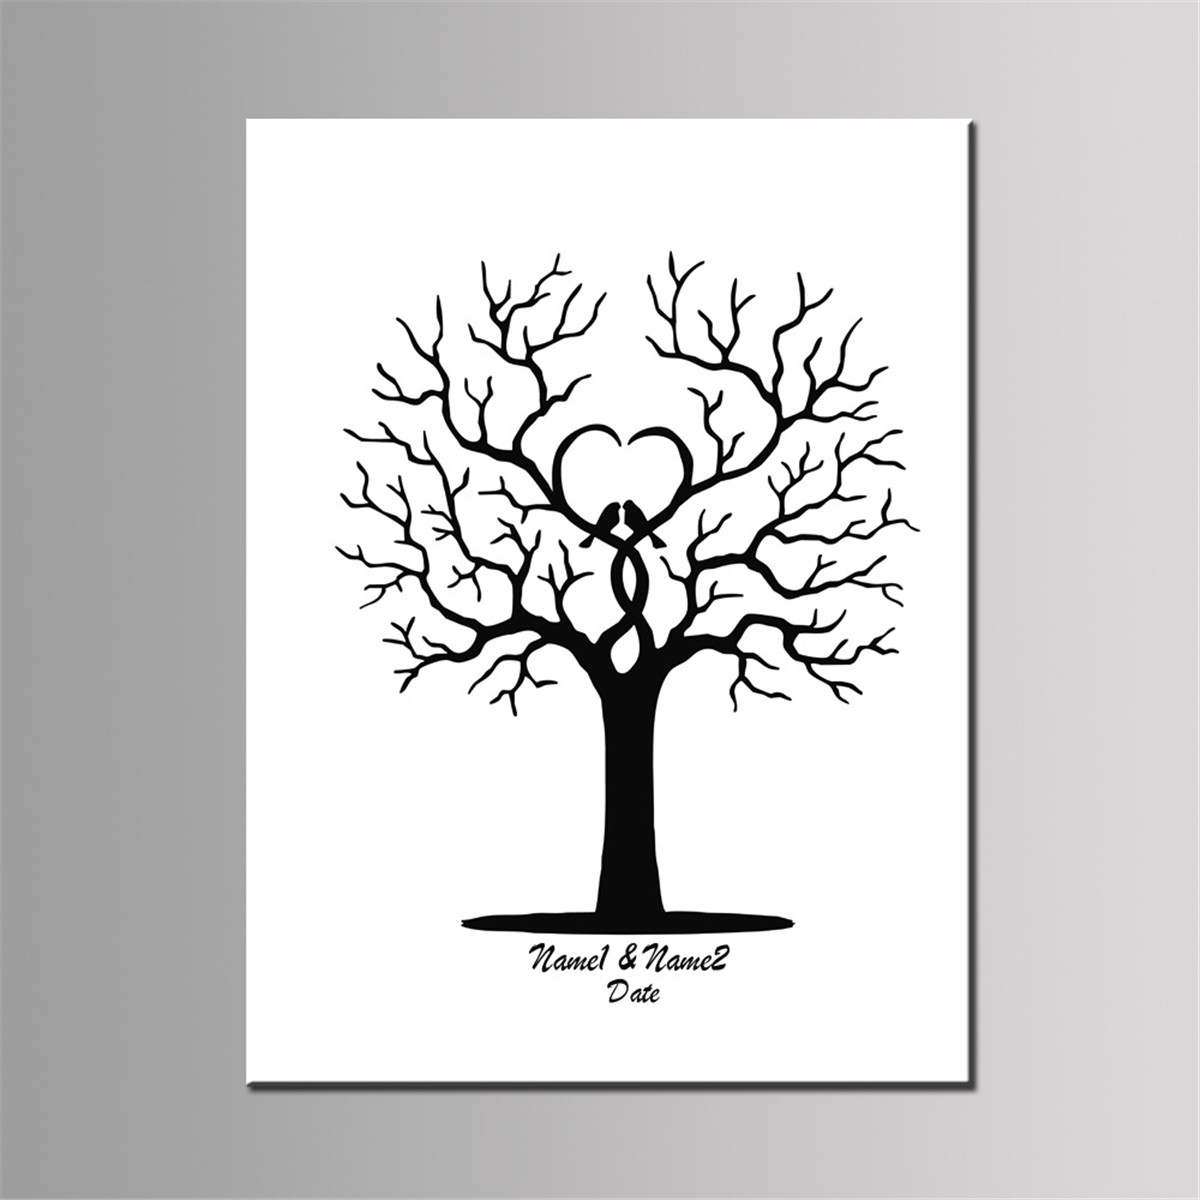 Fingerprint-Thumbprint-DIY-Tree-Wedding-Signature-Sign-Guest-Book-Canvas-Sign-in-Tree-Decorations-1436199-3